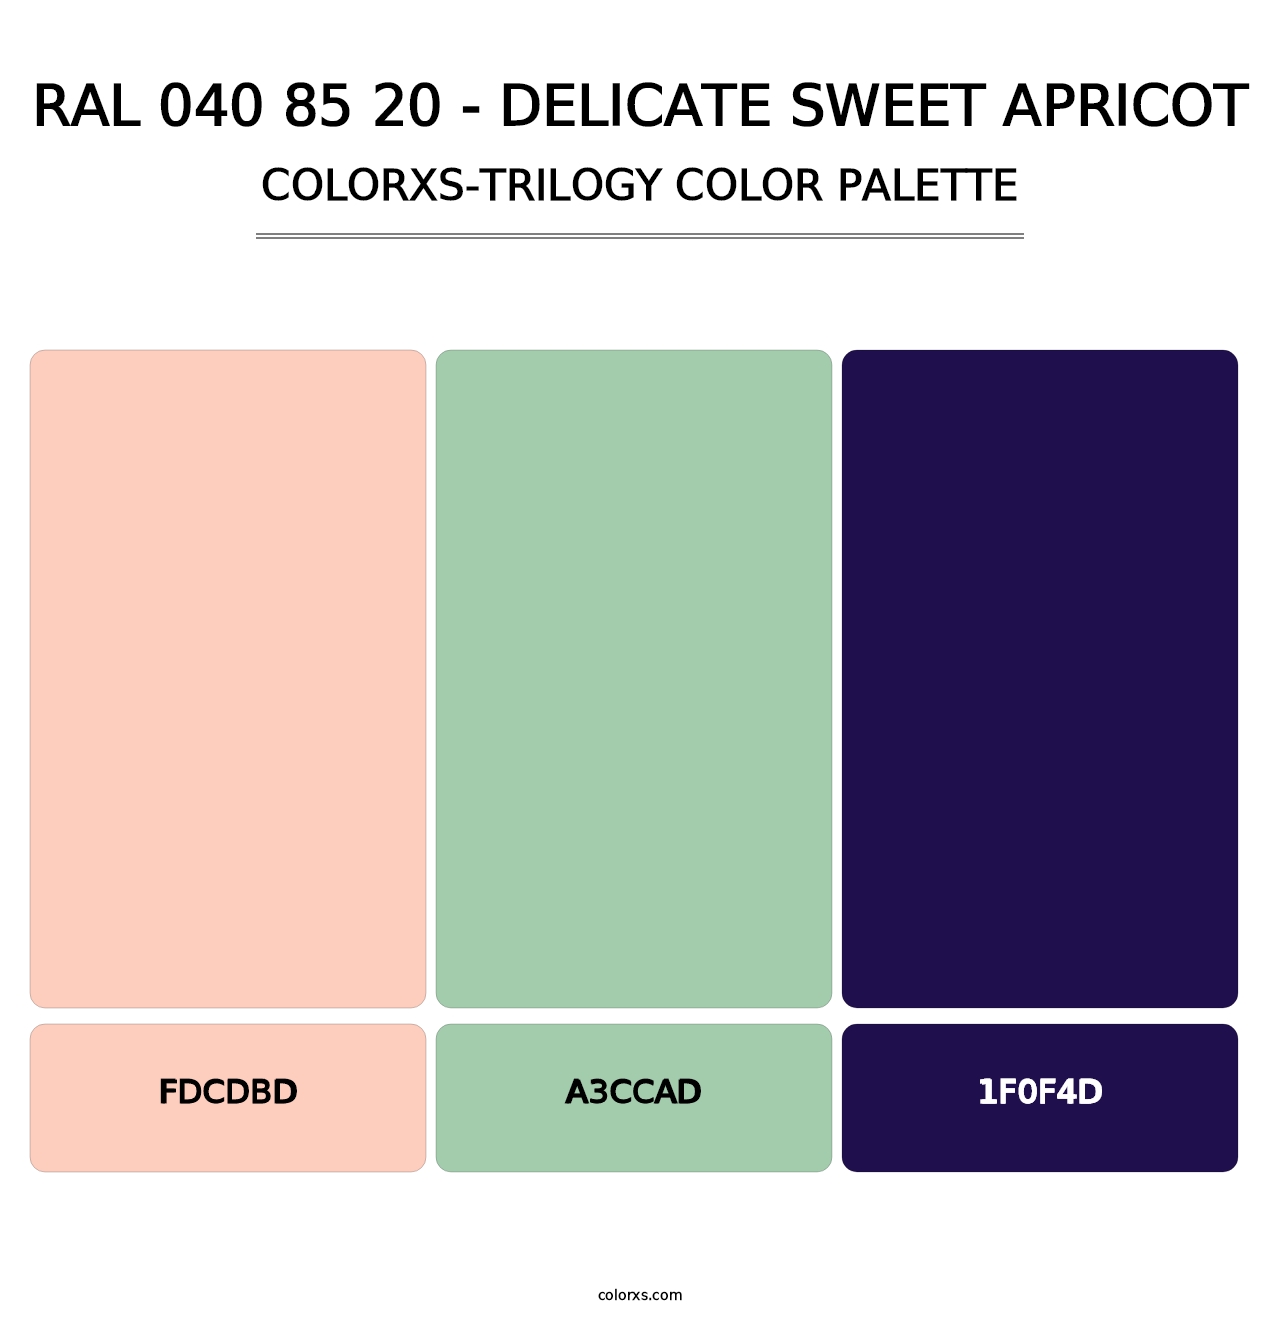 RAL 040 85 20 - Delicate Sweet Apricot - Colorxs Trilogy Palette